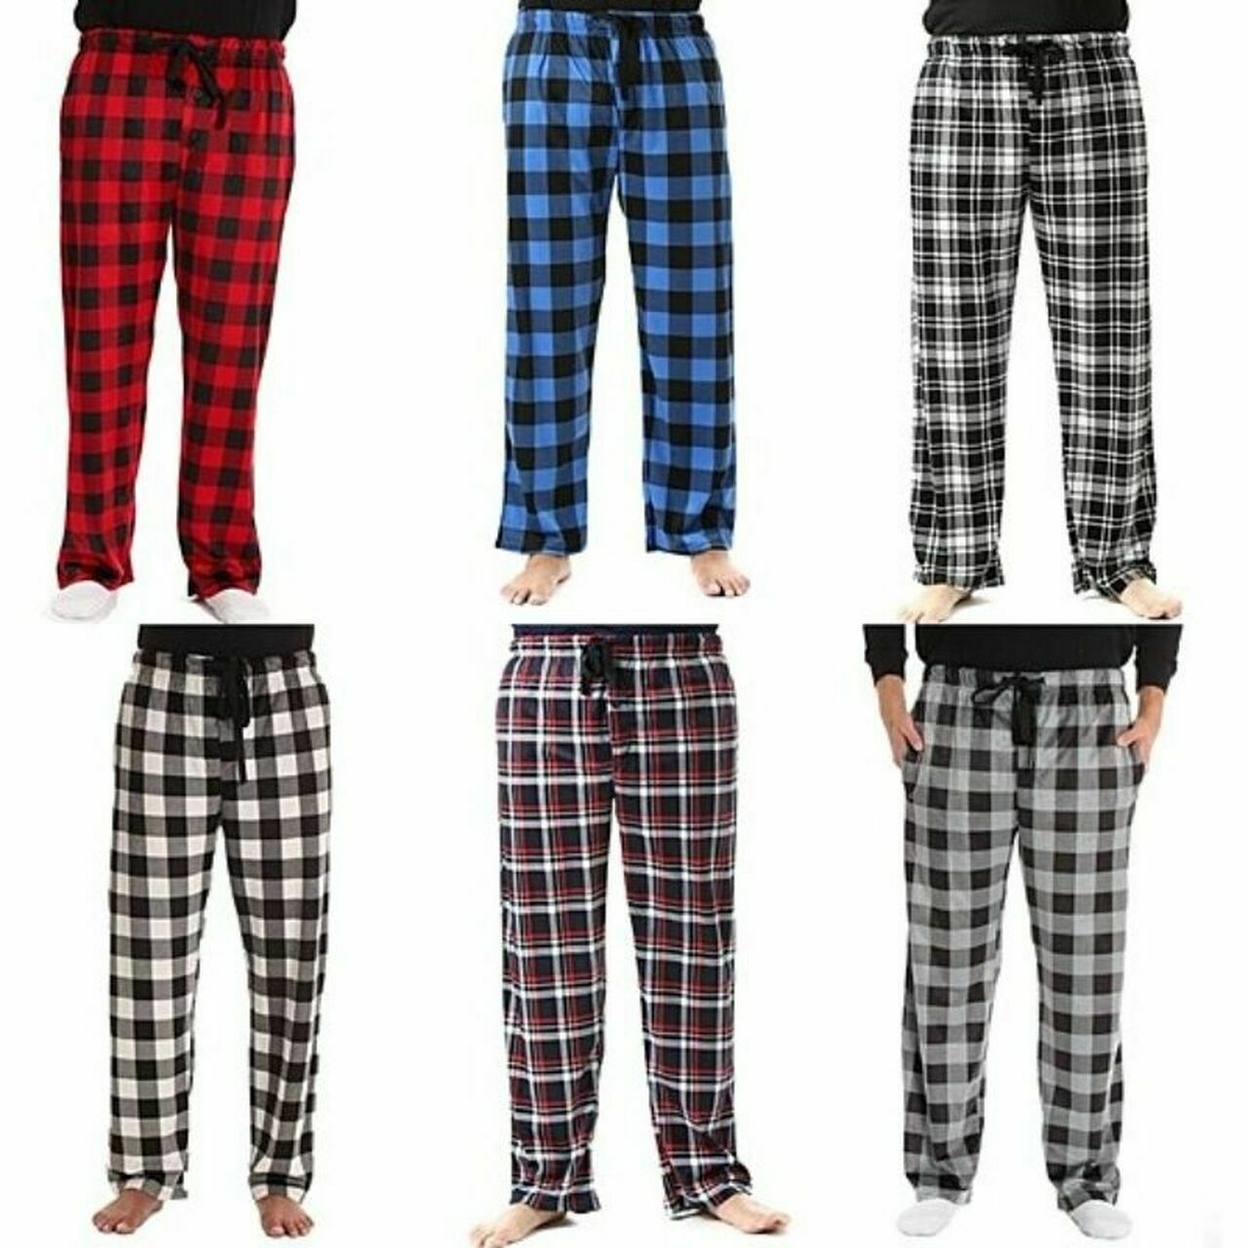 Multi-Pack: Men's Ultra Soft Cozy Flannel Fleece Plaid Pajama Sleep Bottom Lounge Pants - 3-pack, Large